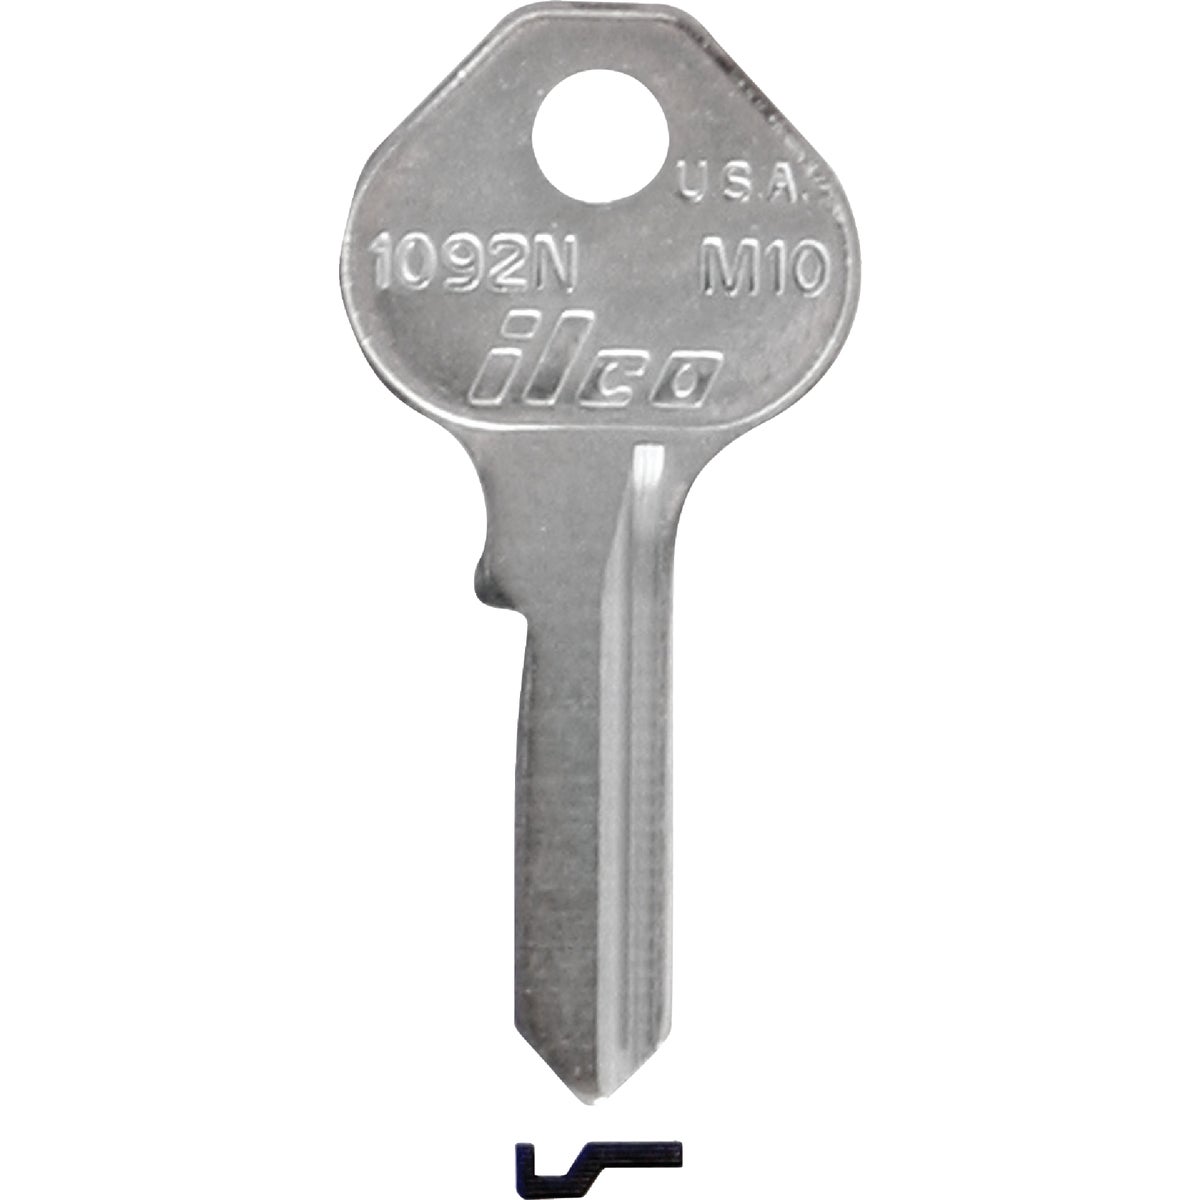 ILCO Master Nickel Plated Padlock Key M10 / 1092N (10-Pack)